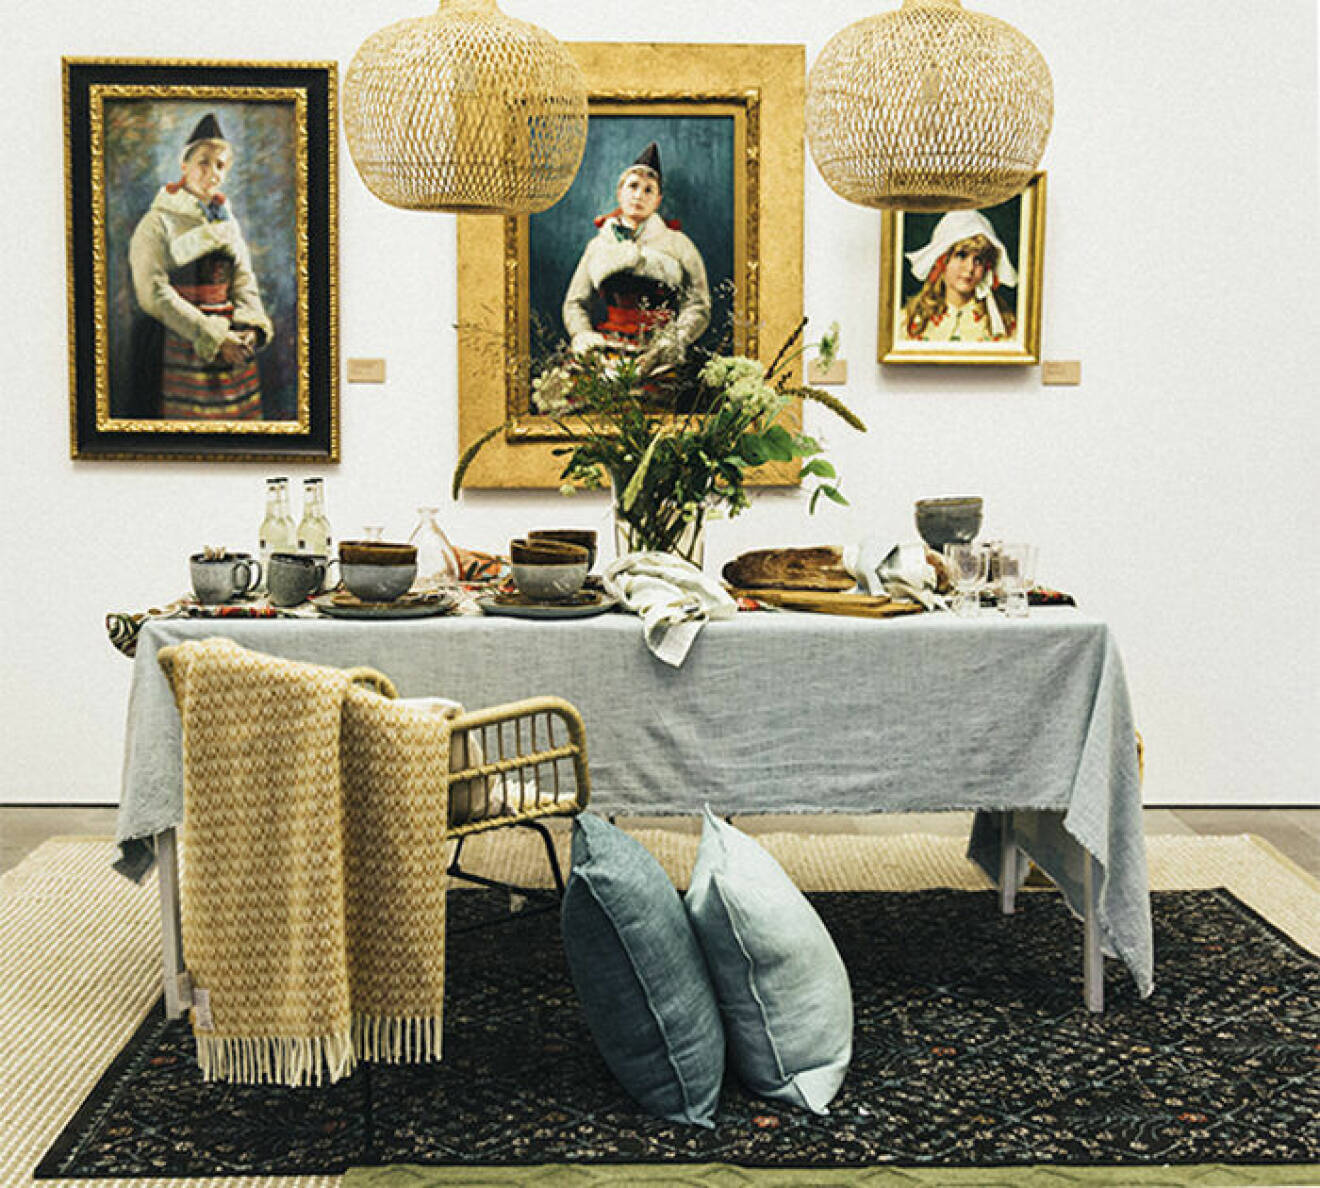 Åhléns vårkollektion visades på Sven Harrys konstmuseum i Stockholm